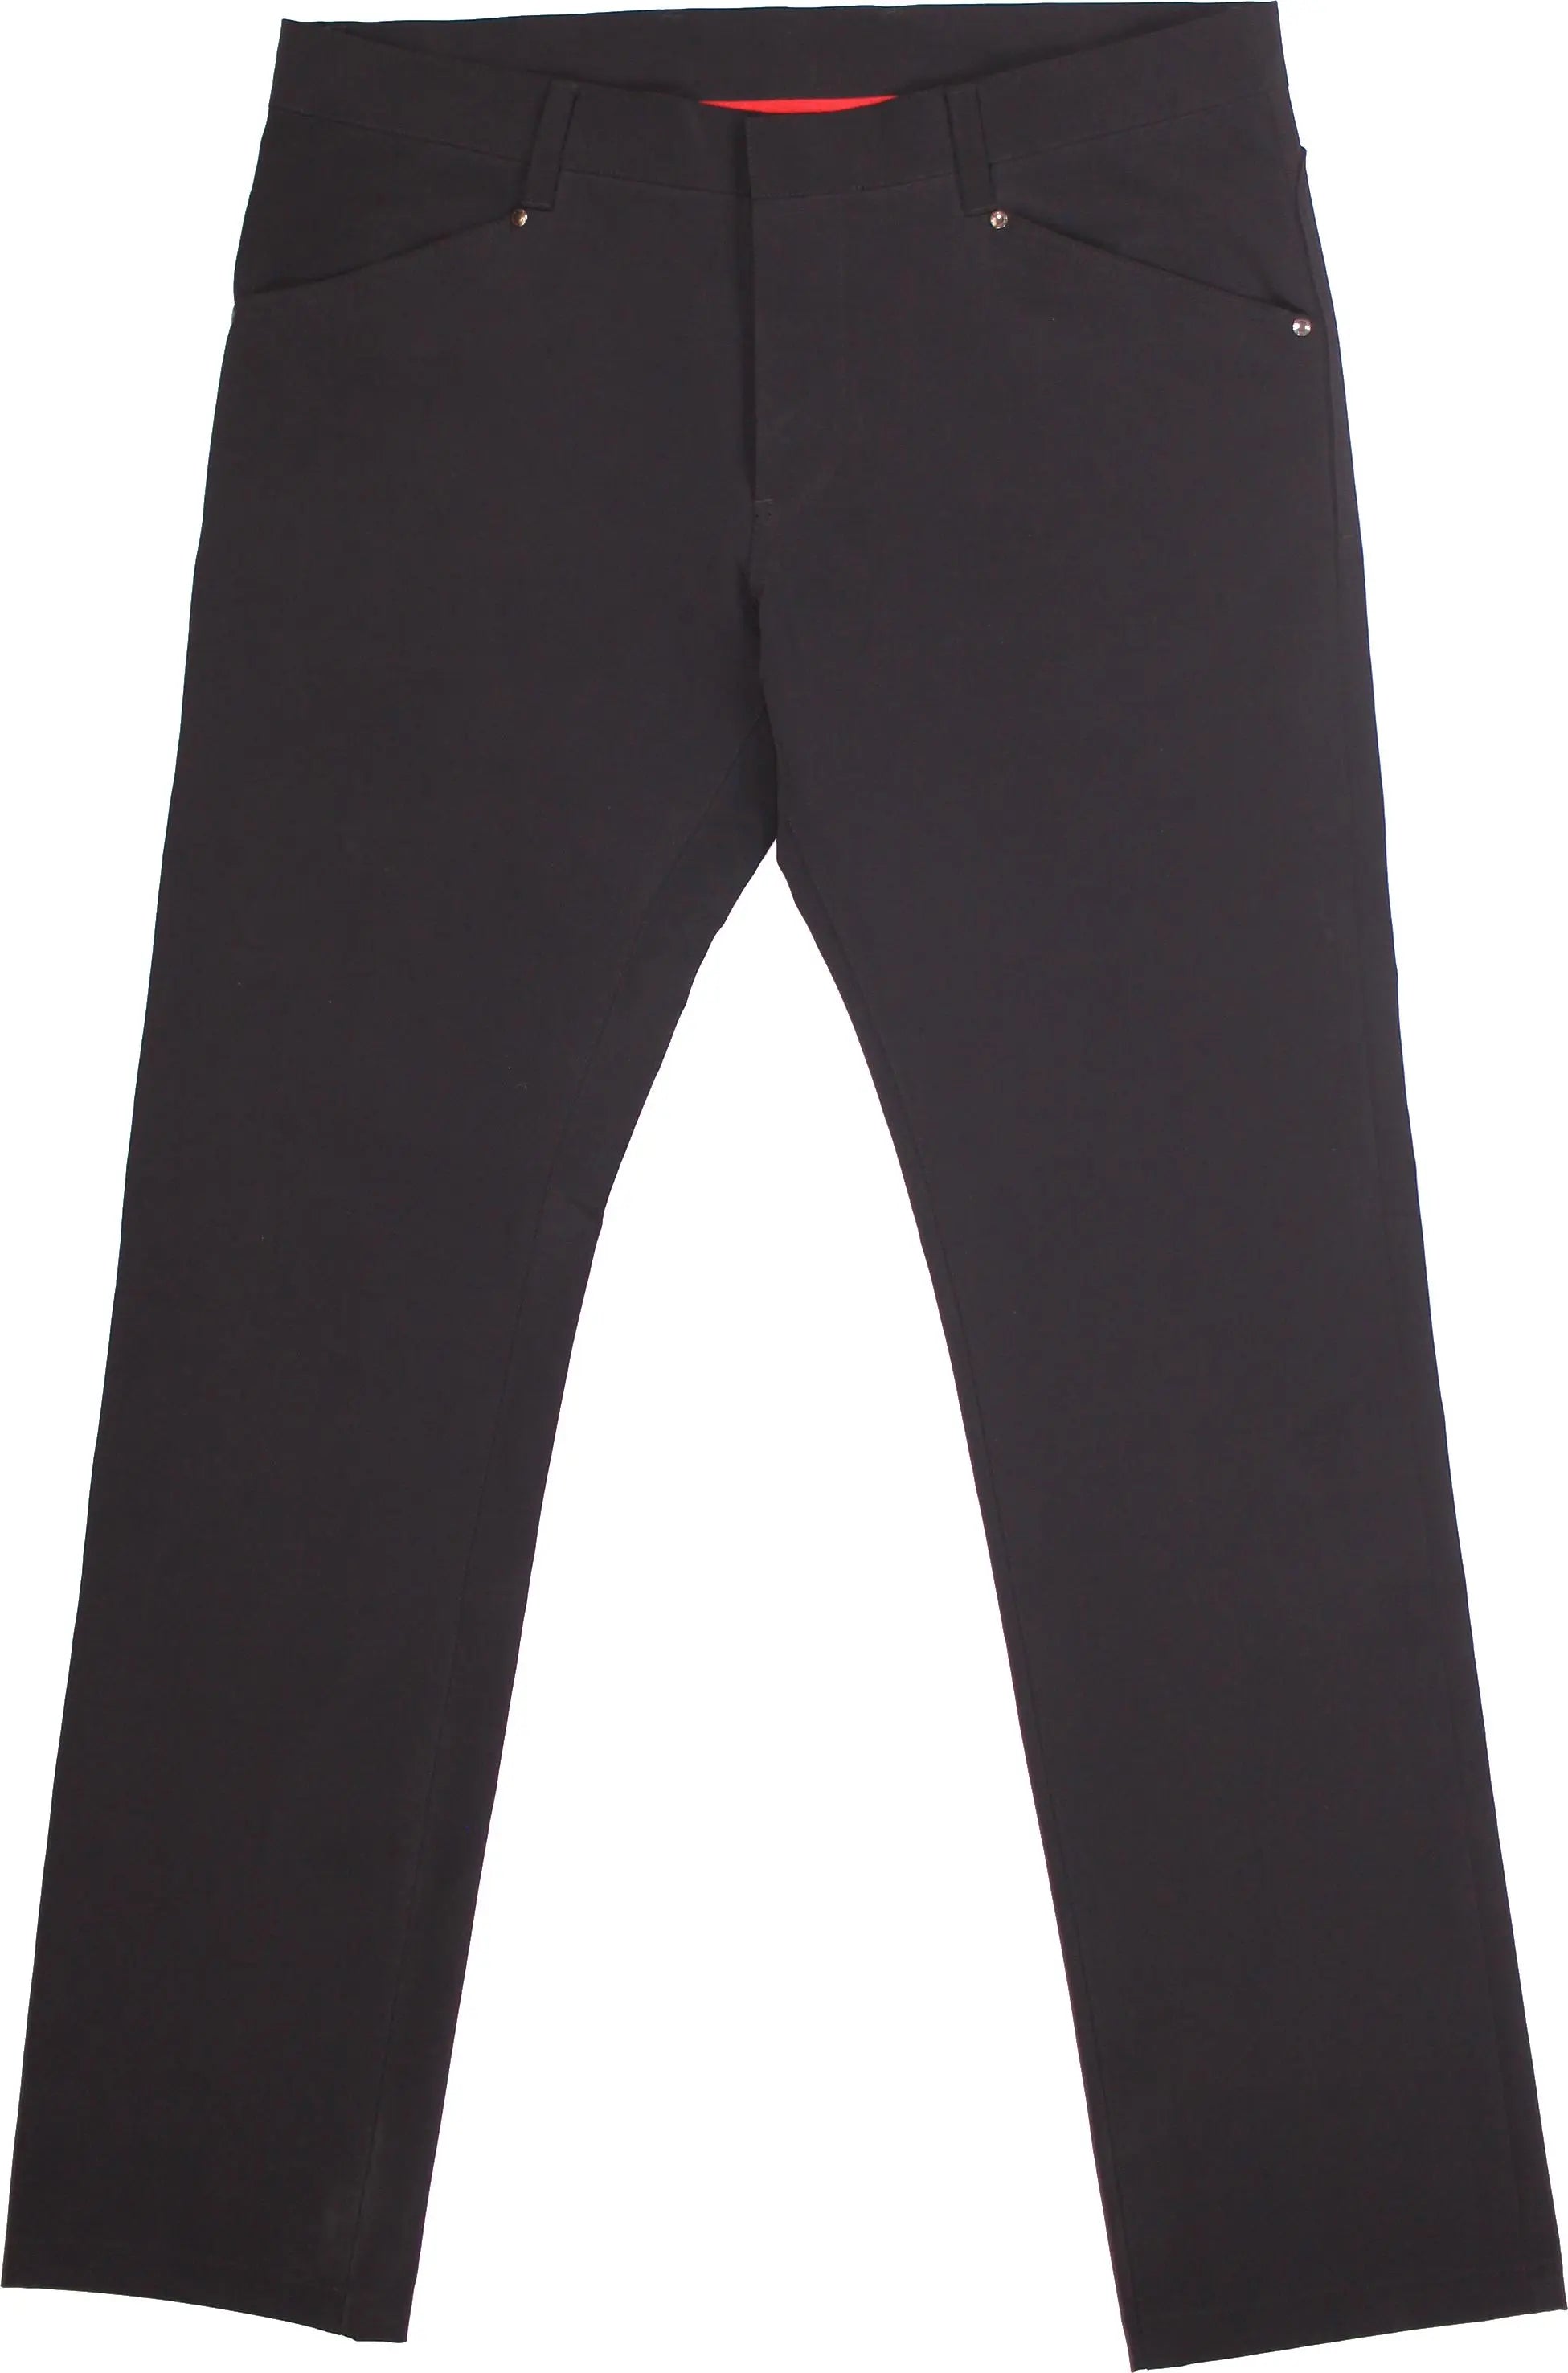 Prada - Prada Black Trousers- ThriftTale.com - Vintage and second handclothing